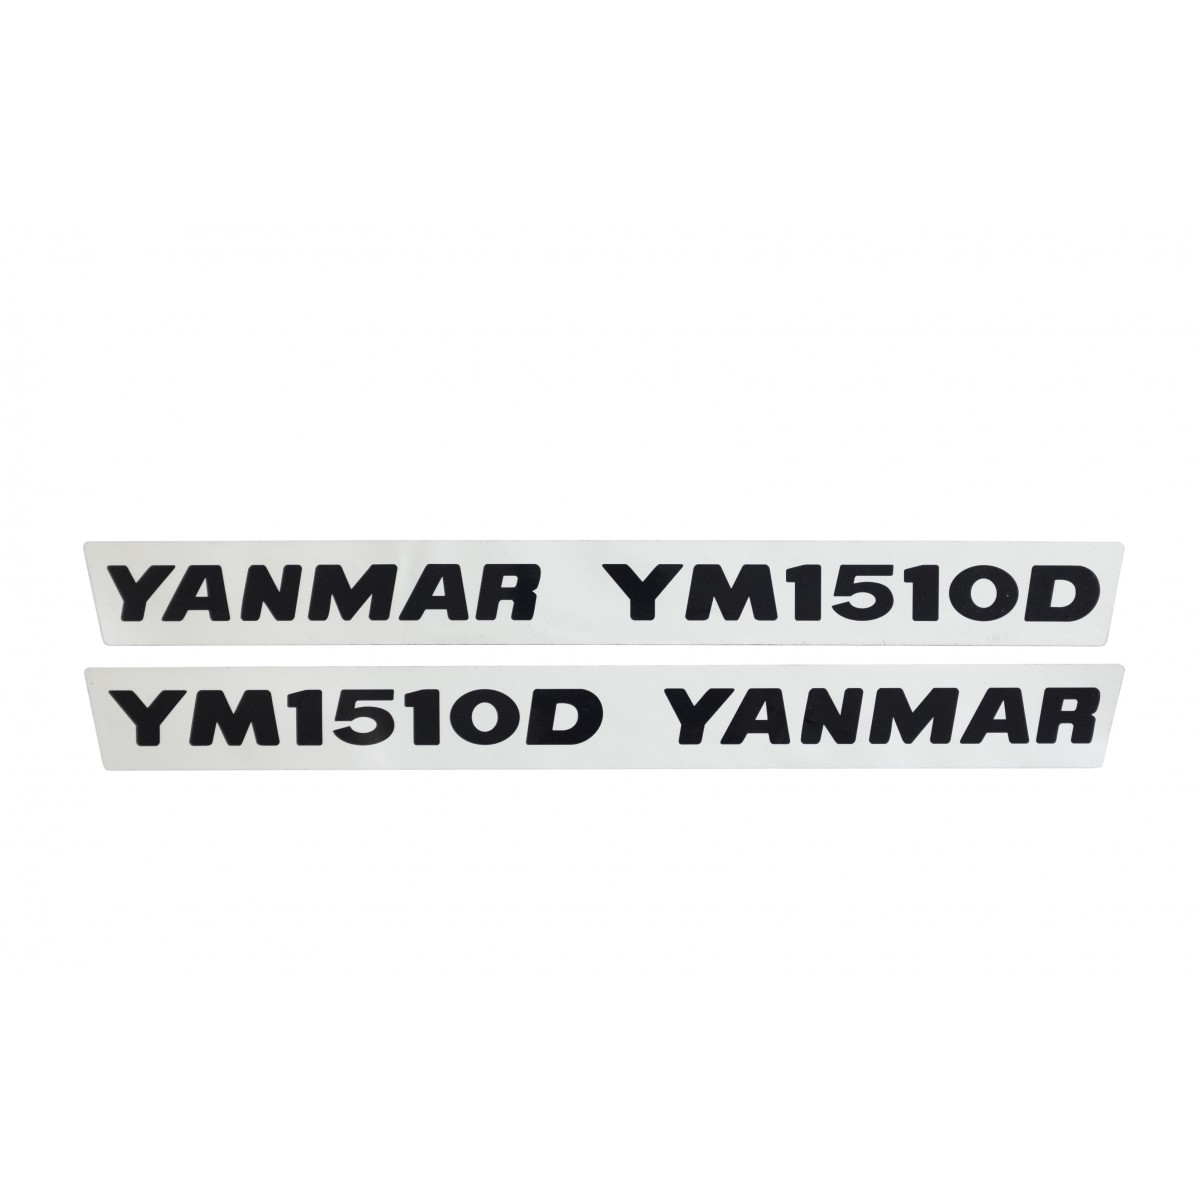 Nálepky (2 ks) Yanmar YM1510D